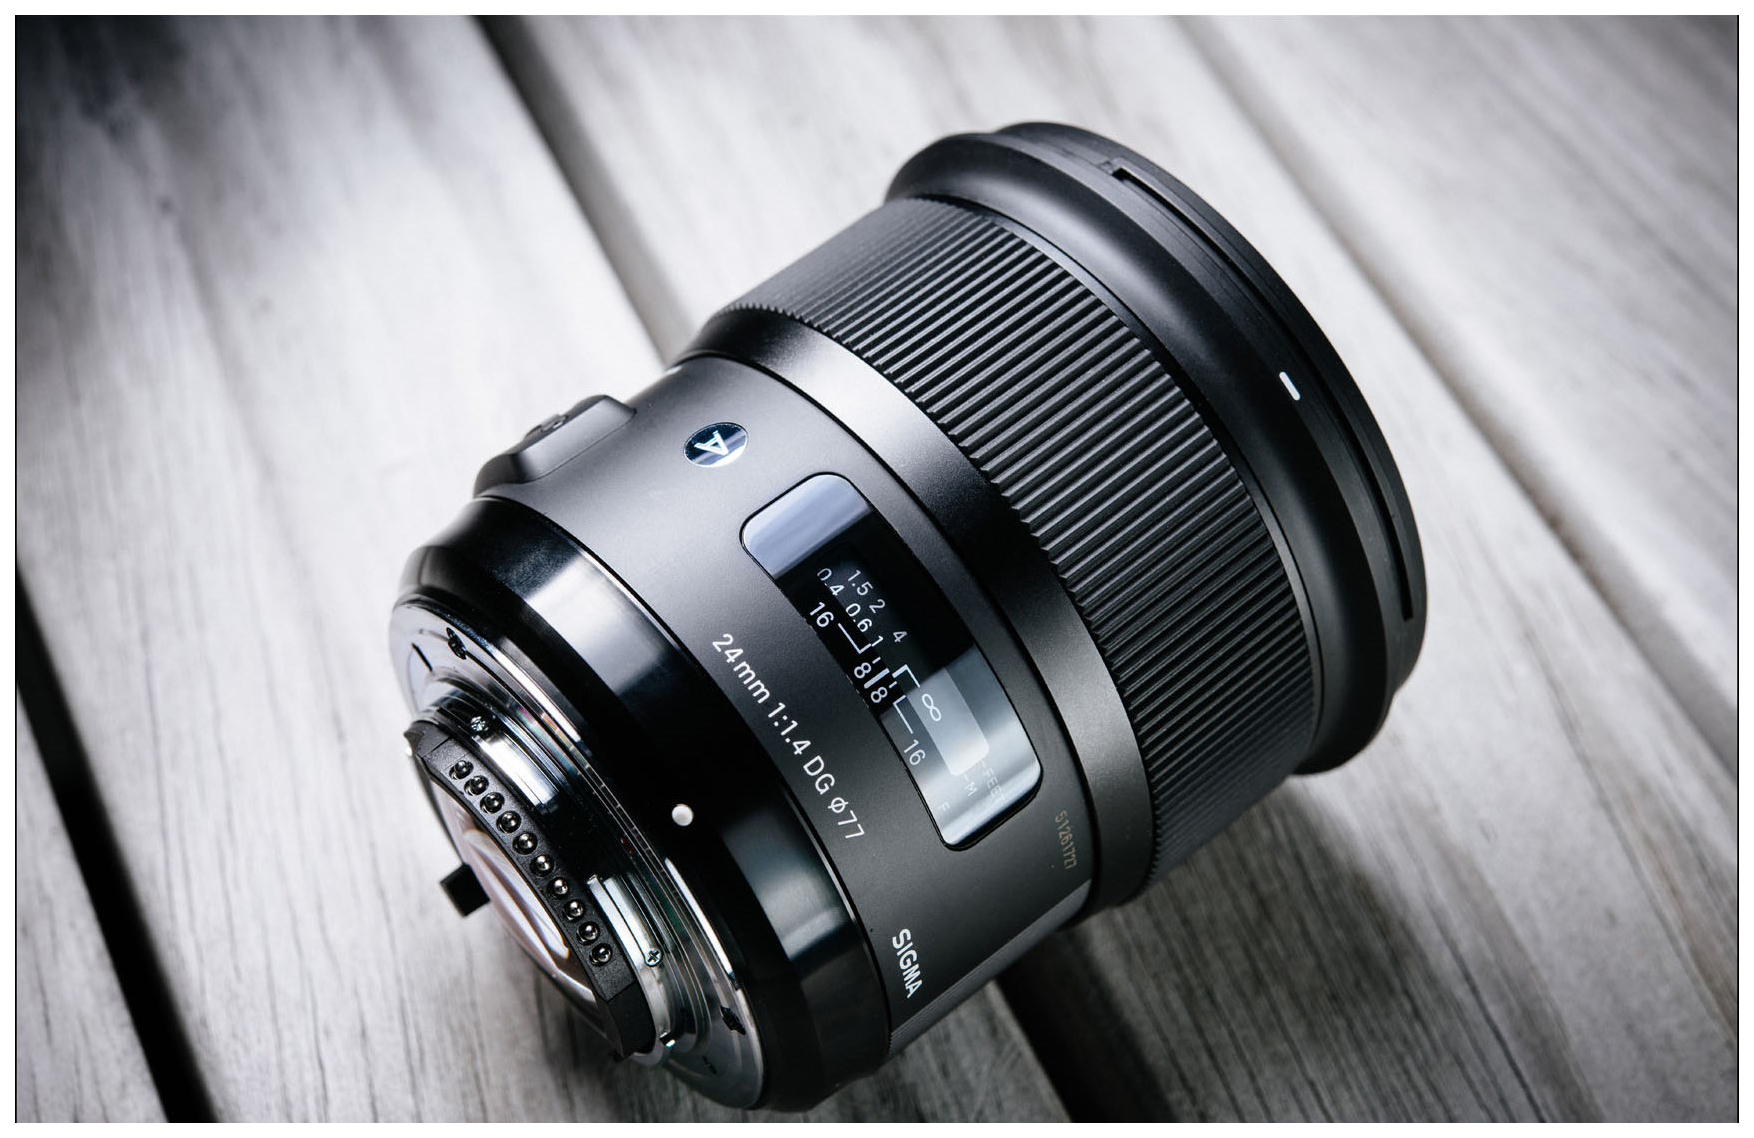 Sigma 35mm f/1.4 DG HSM Art: Widely used standard lens.